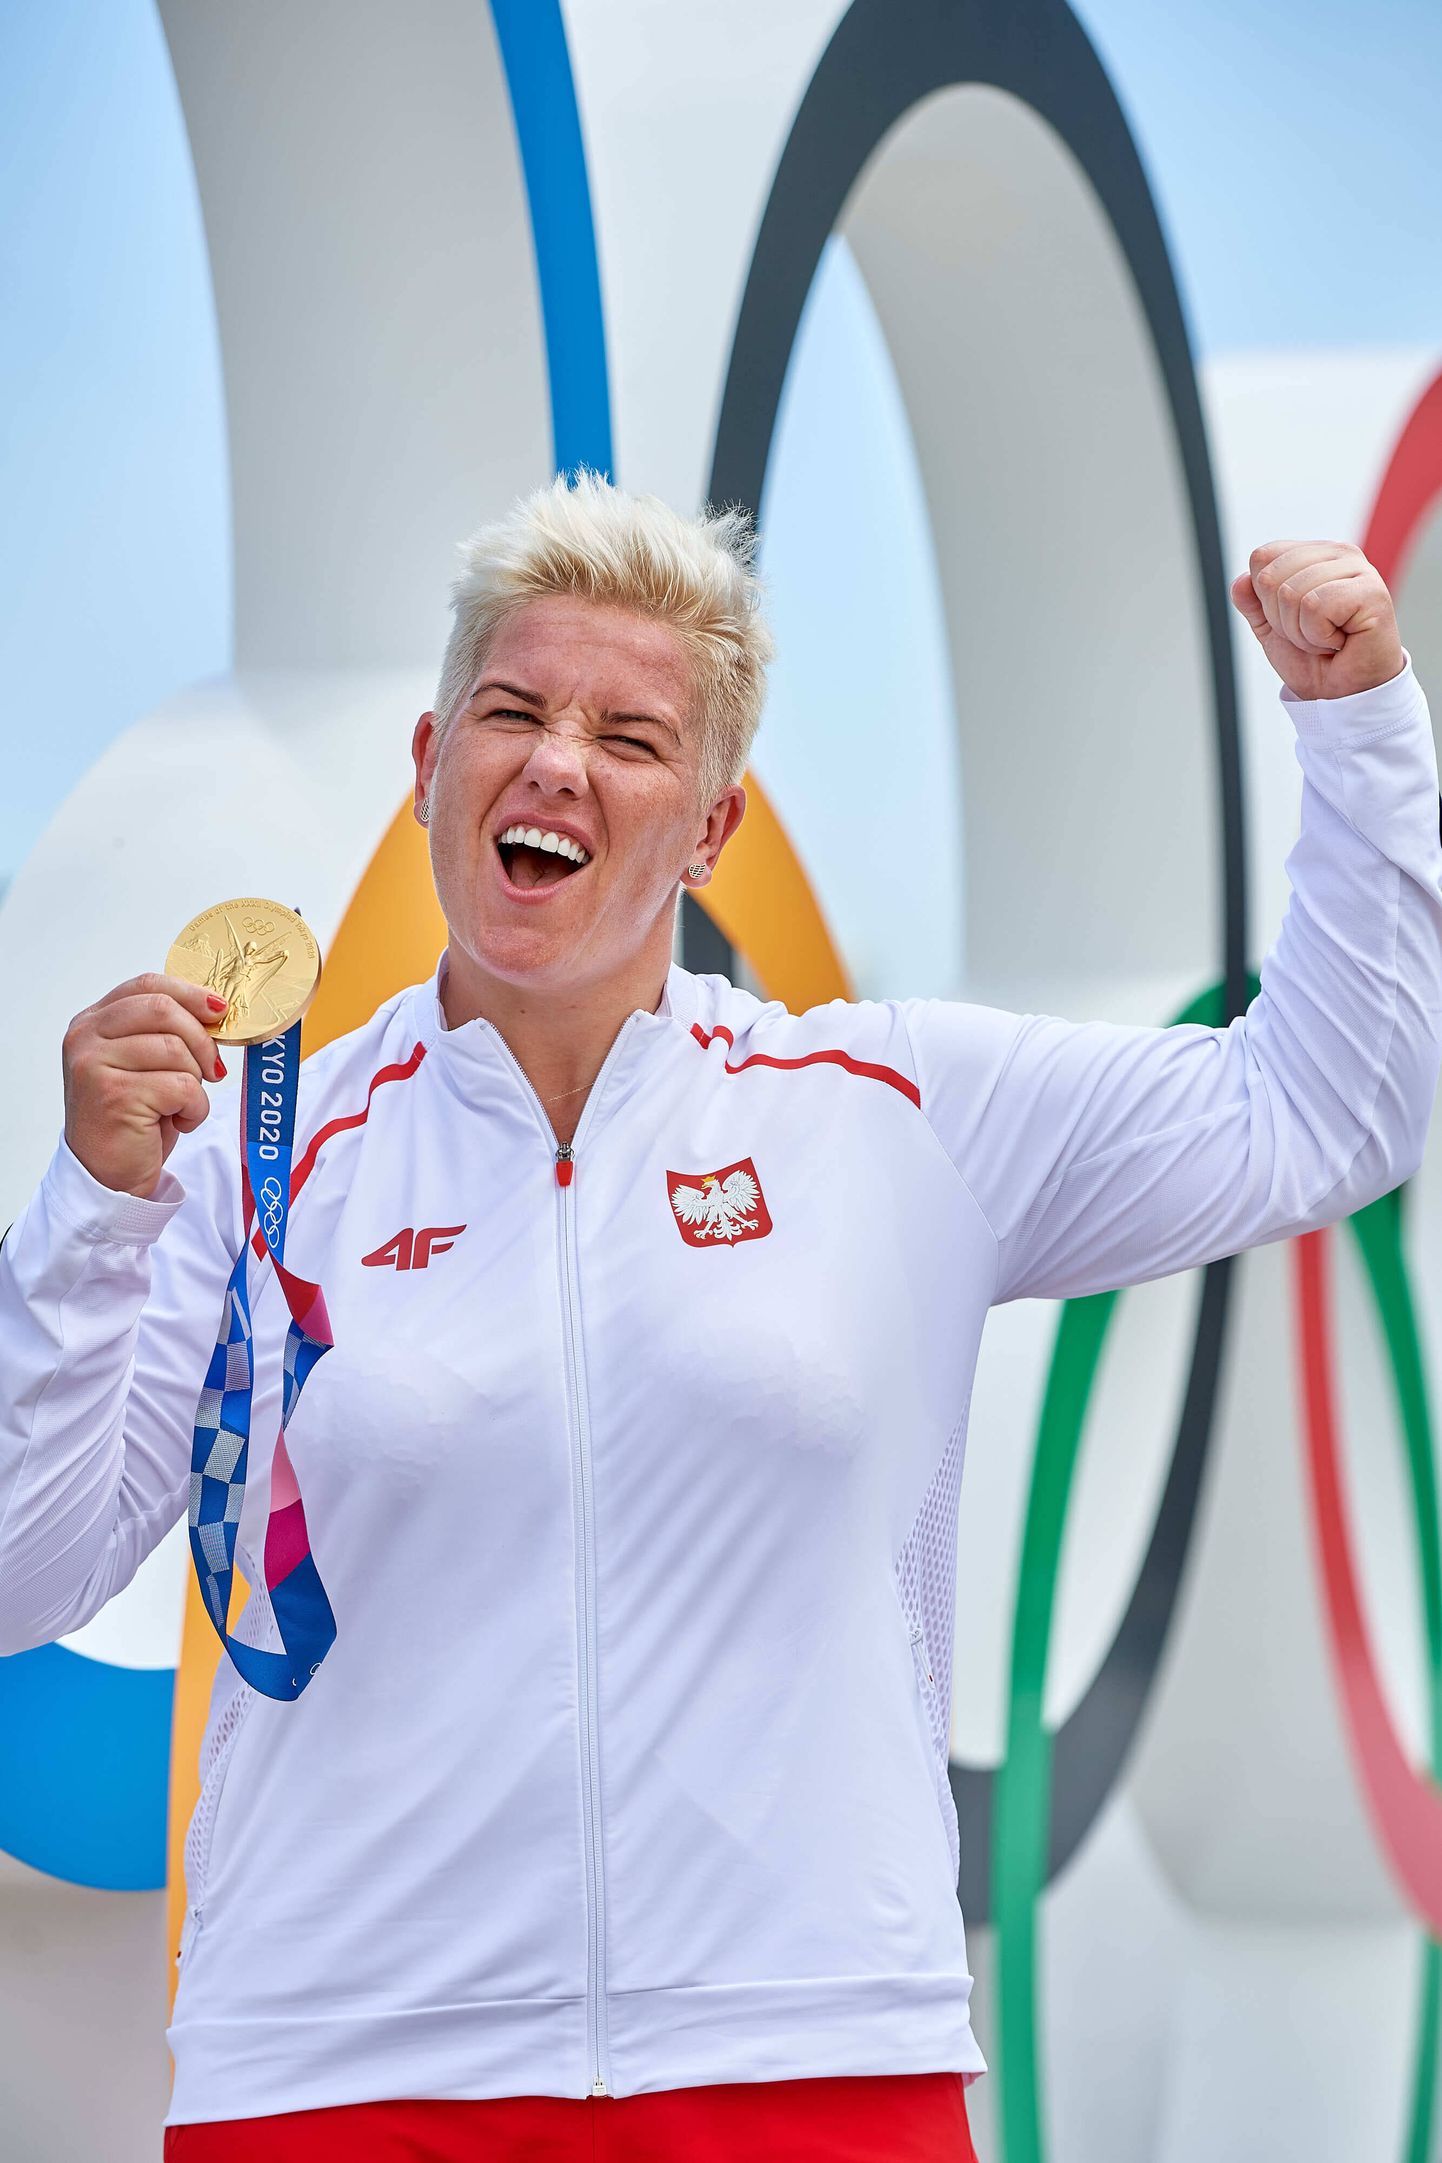 Anita Włodarczyk rõõmustamas järjekordse kuldmedali üle.